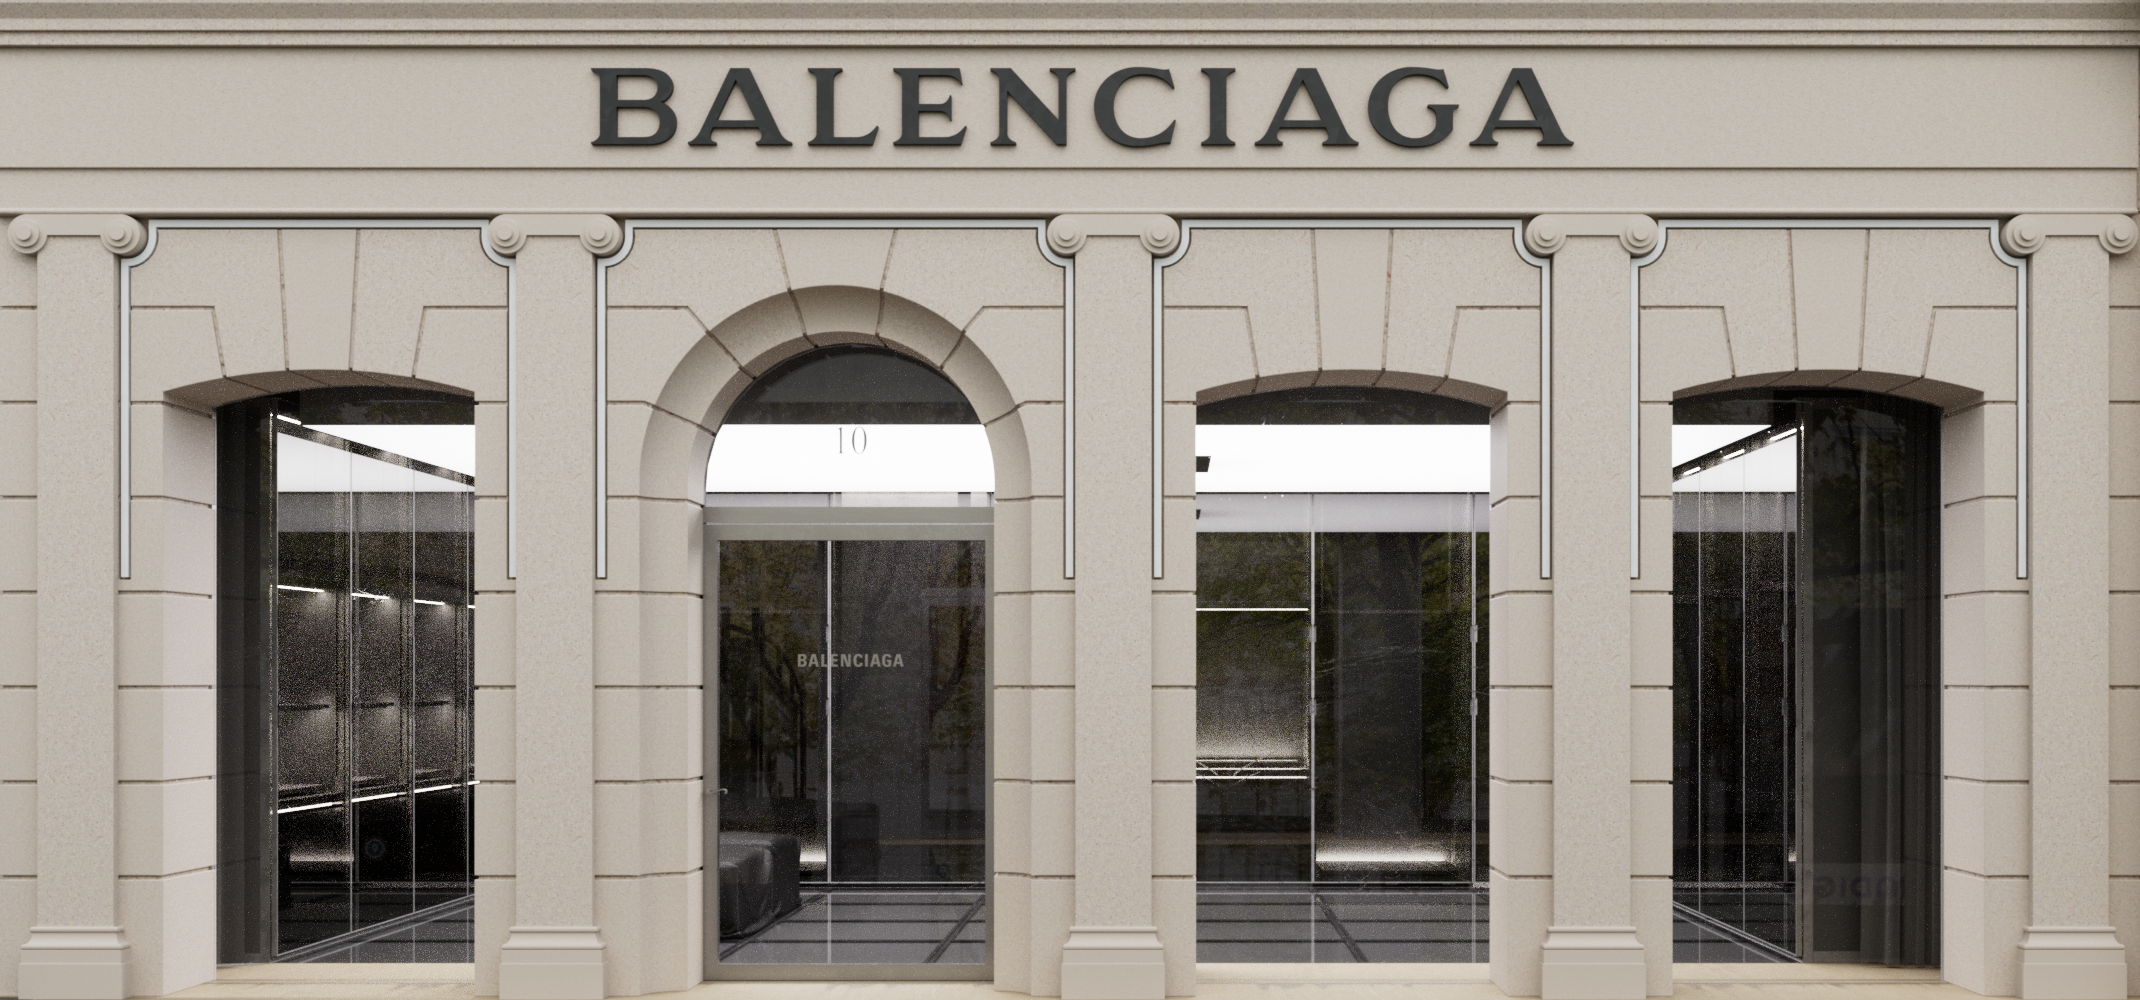 BALENCIAGA-COUTURE-STORE-IMAGE-1.png